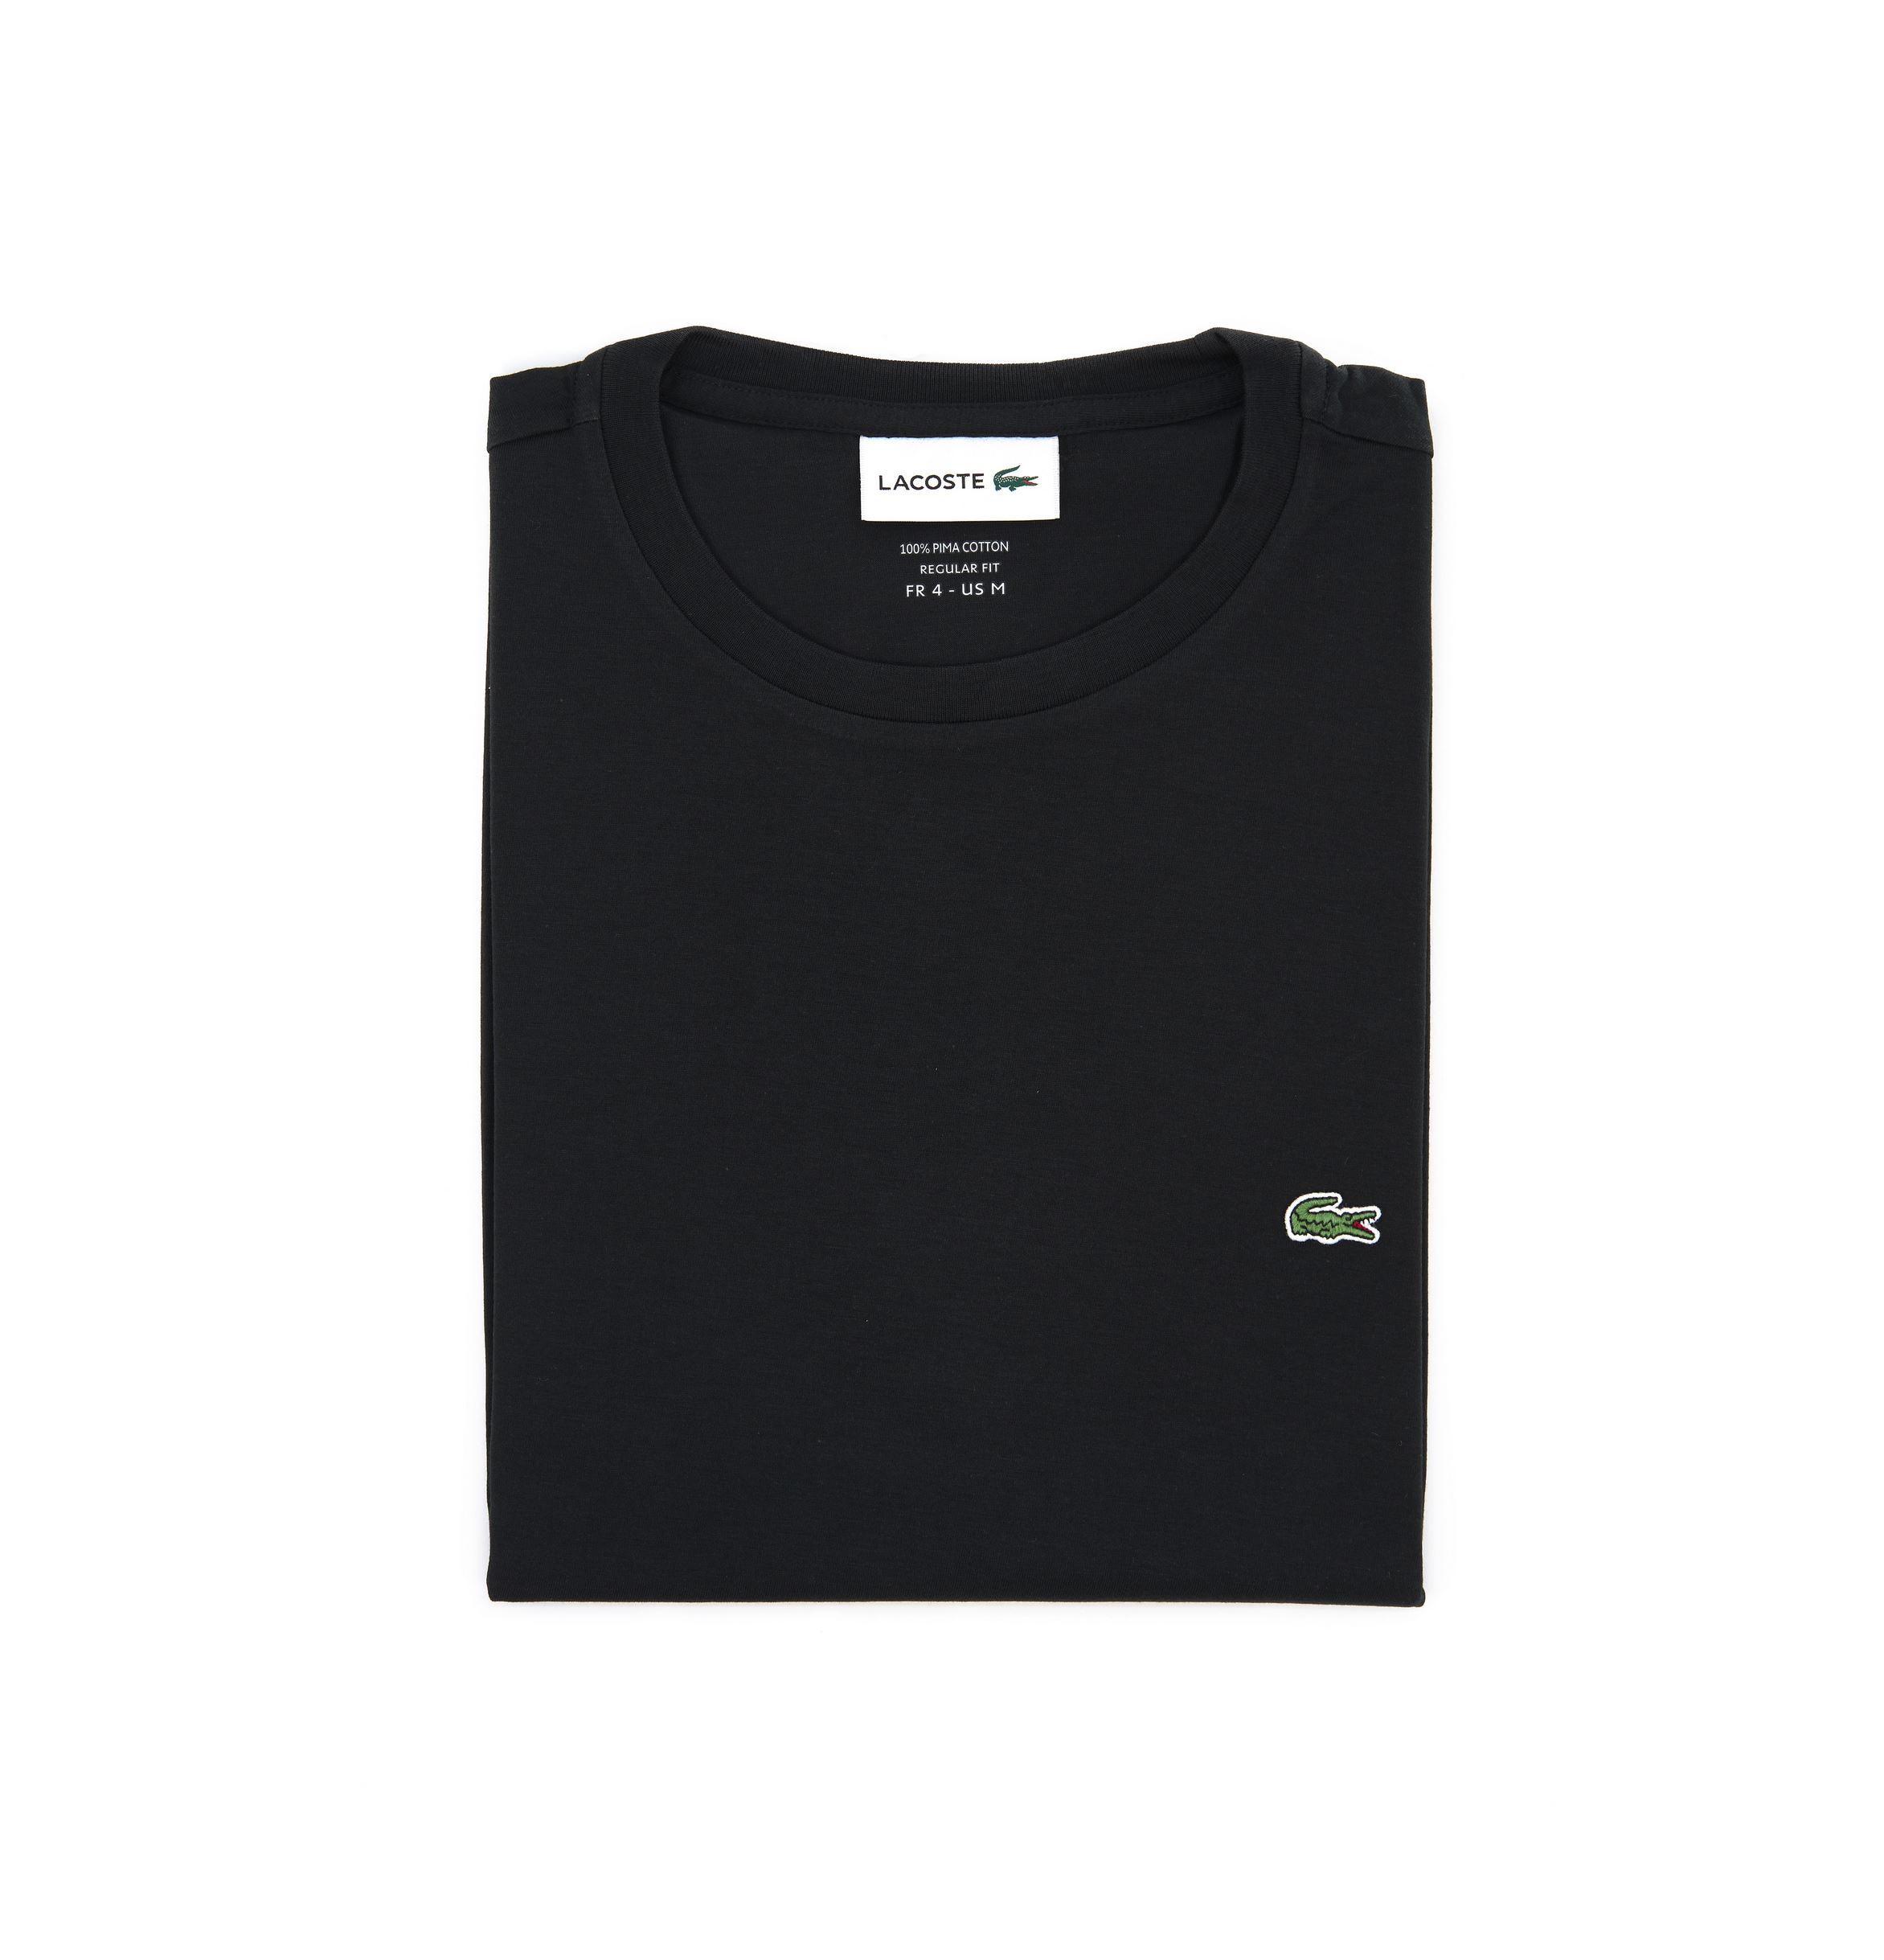 Lacoste t-shirt long sleeve black - Store